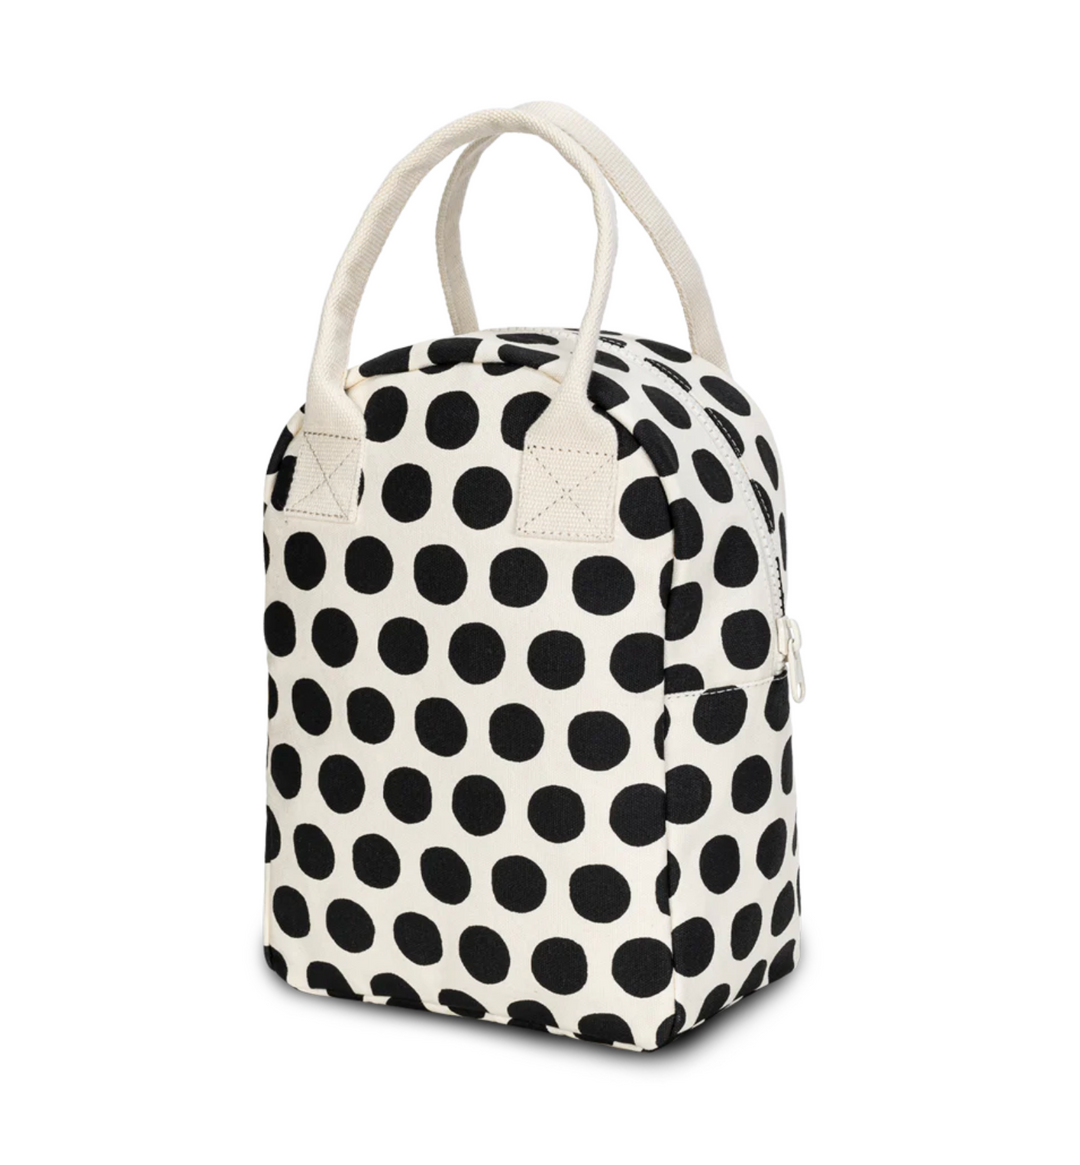 Fluf Zipper Lunch Bag - Black Polka Dot